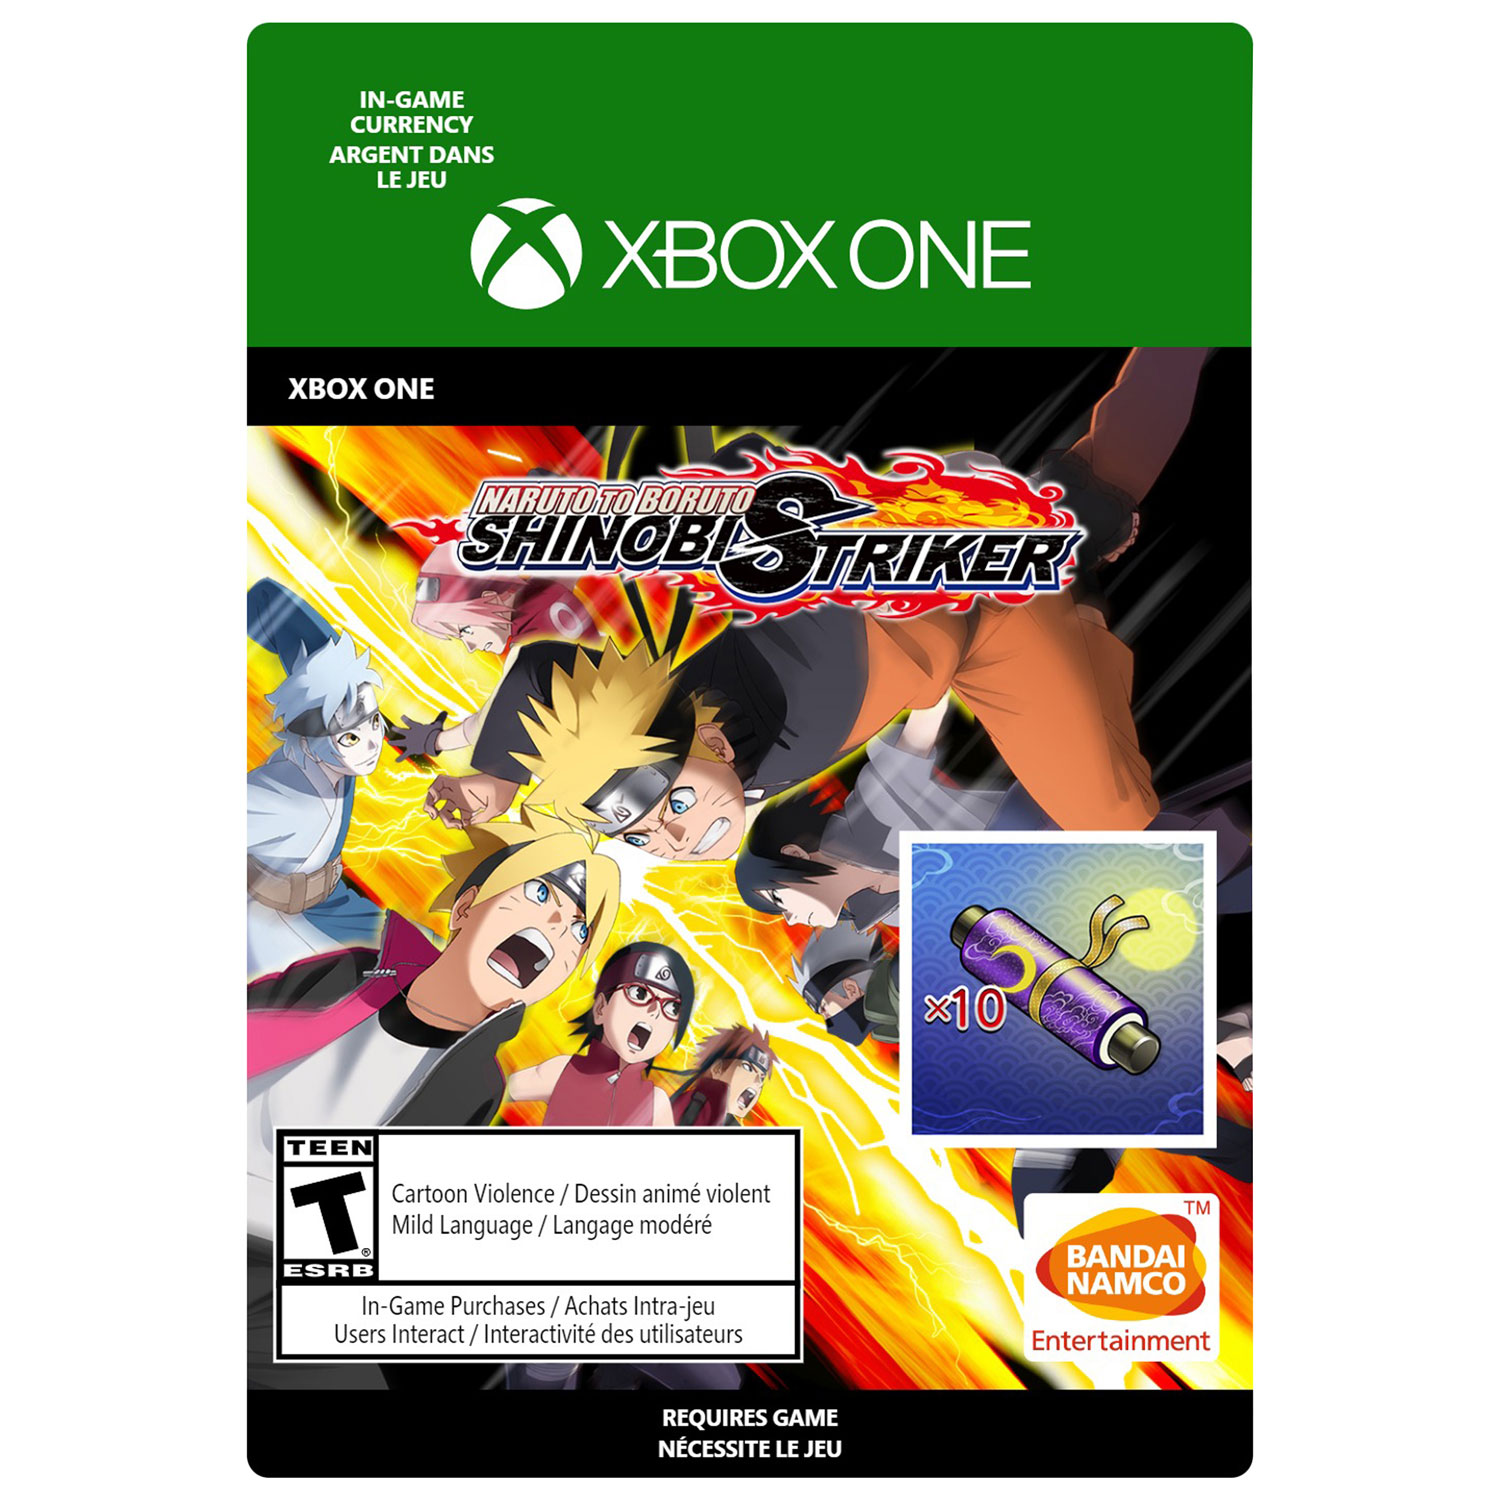 Naruto to Boruto: Shinobi Striker - Moonlight Scroll x10 (Xbox One) - Digital Download